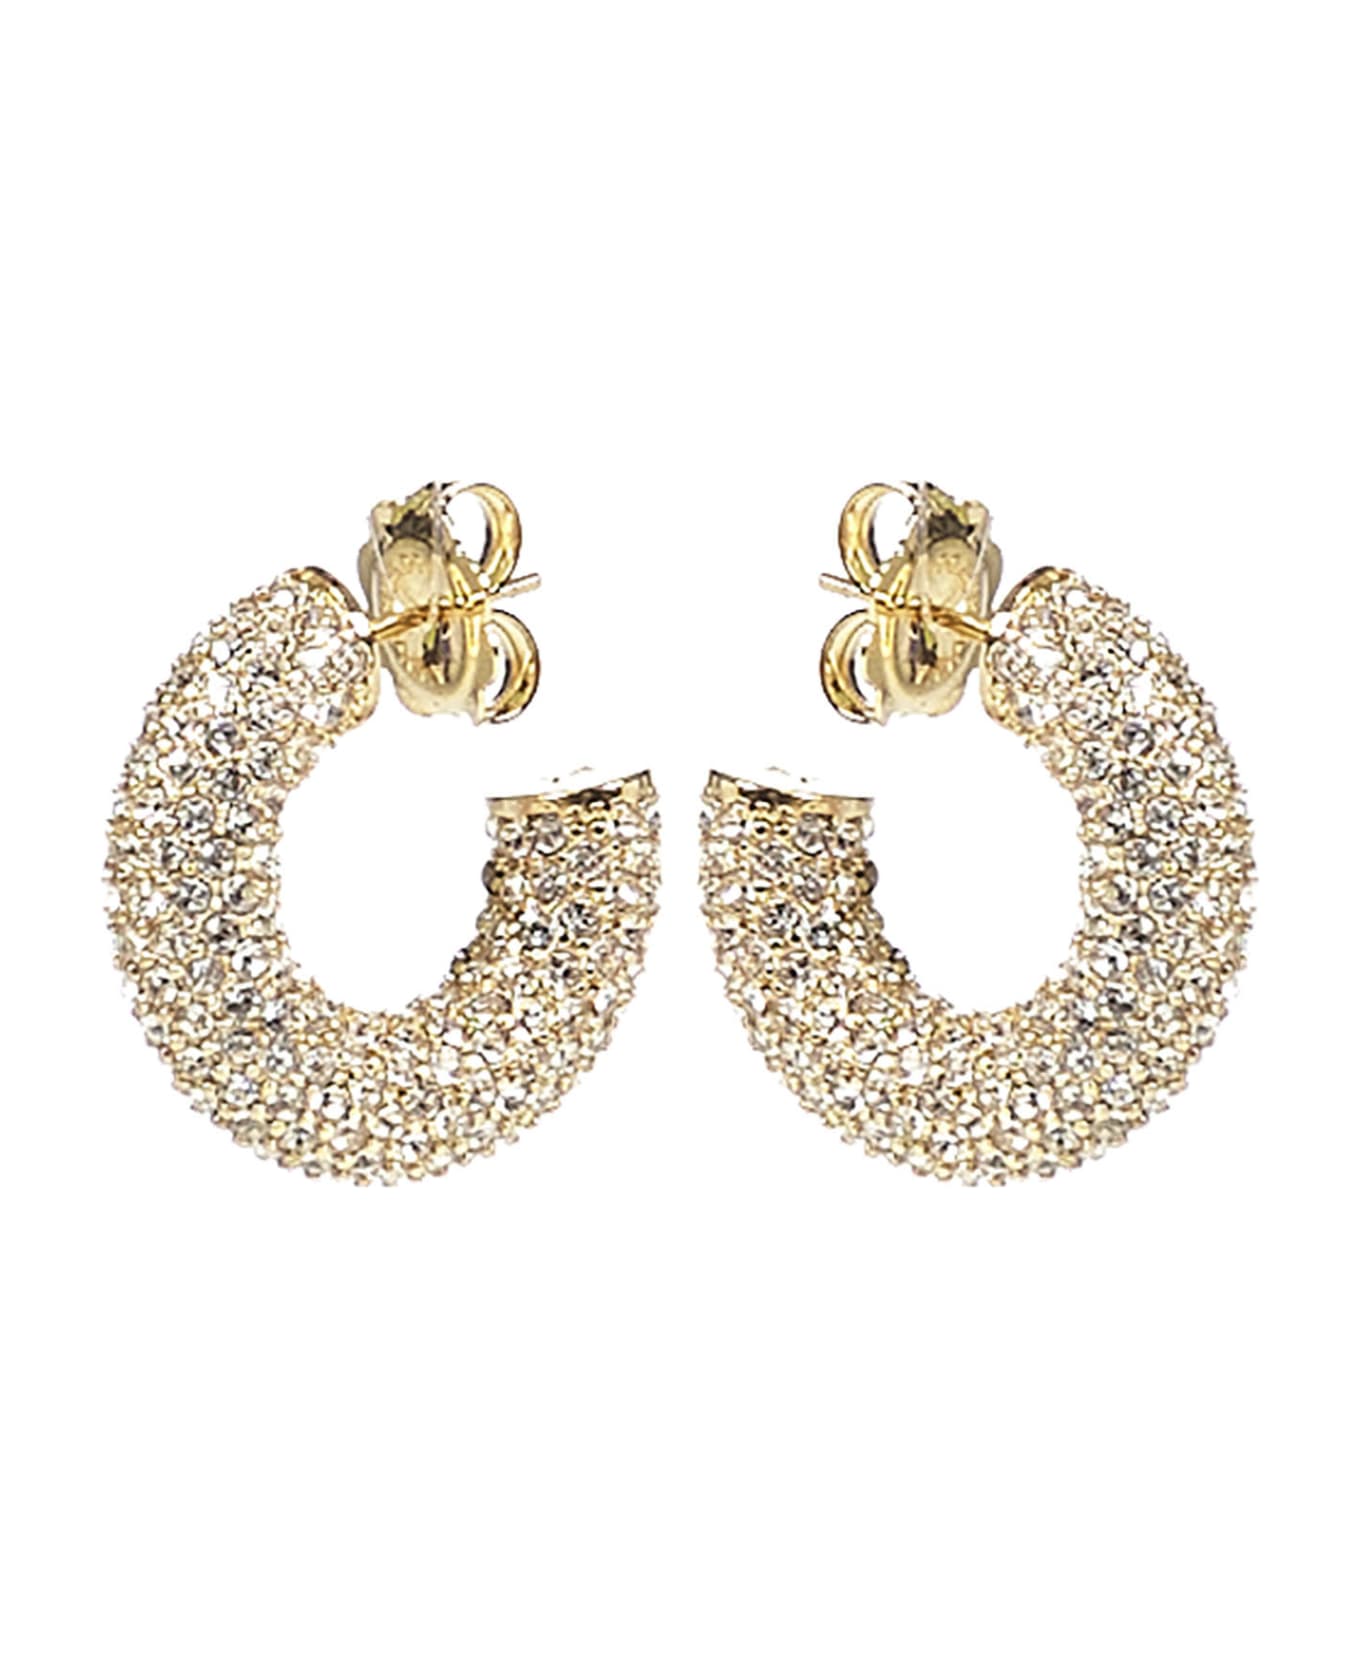 Amina Muaddi Cameron Small Earrings - Golden イヤリング